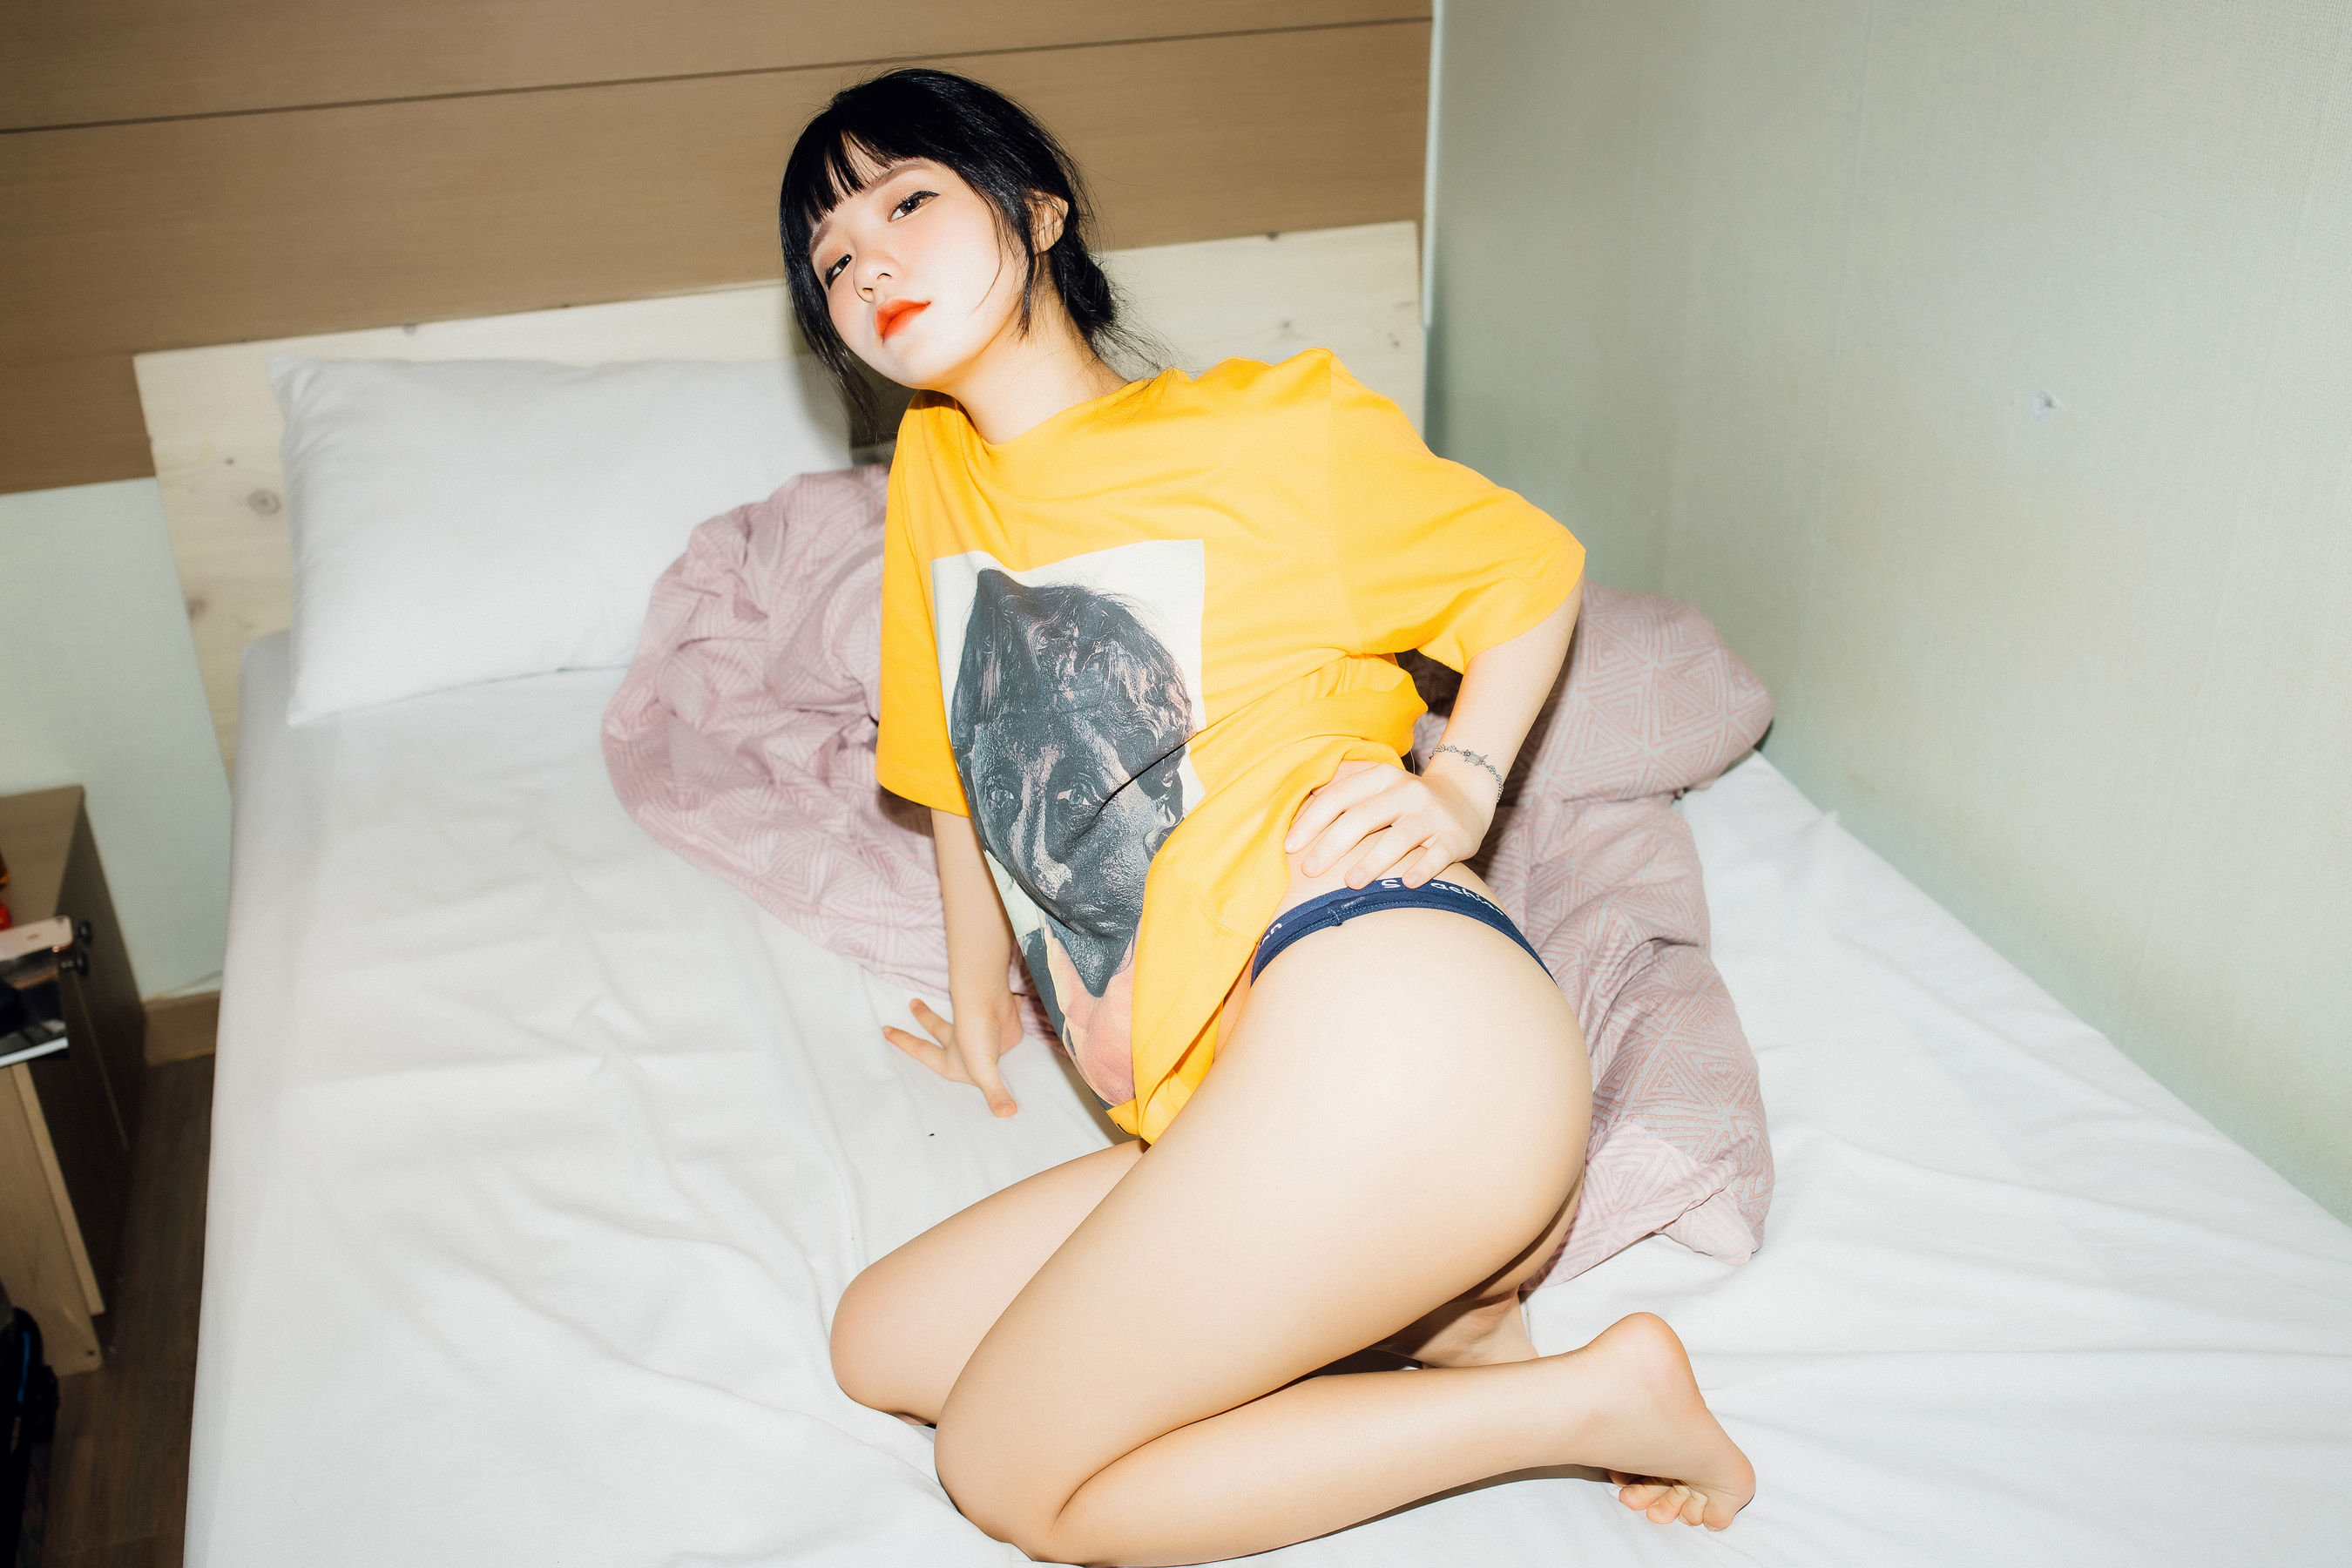 People 2700x1800 women model Asian Korean dark hair ass blue panties yellow t-shirt in bed feet women indoors T-shirt Jenny Jeong